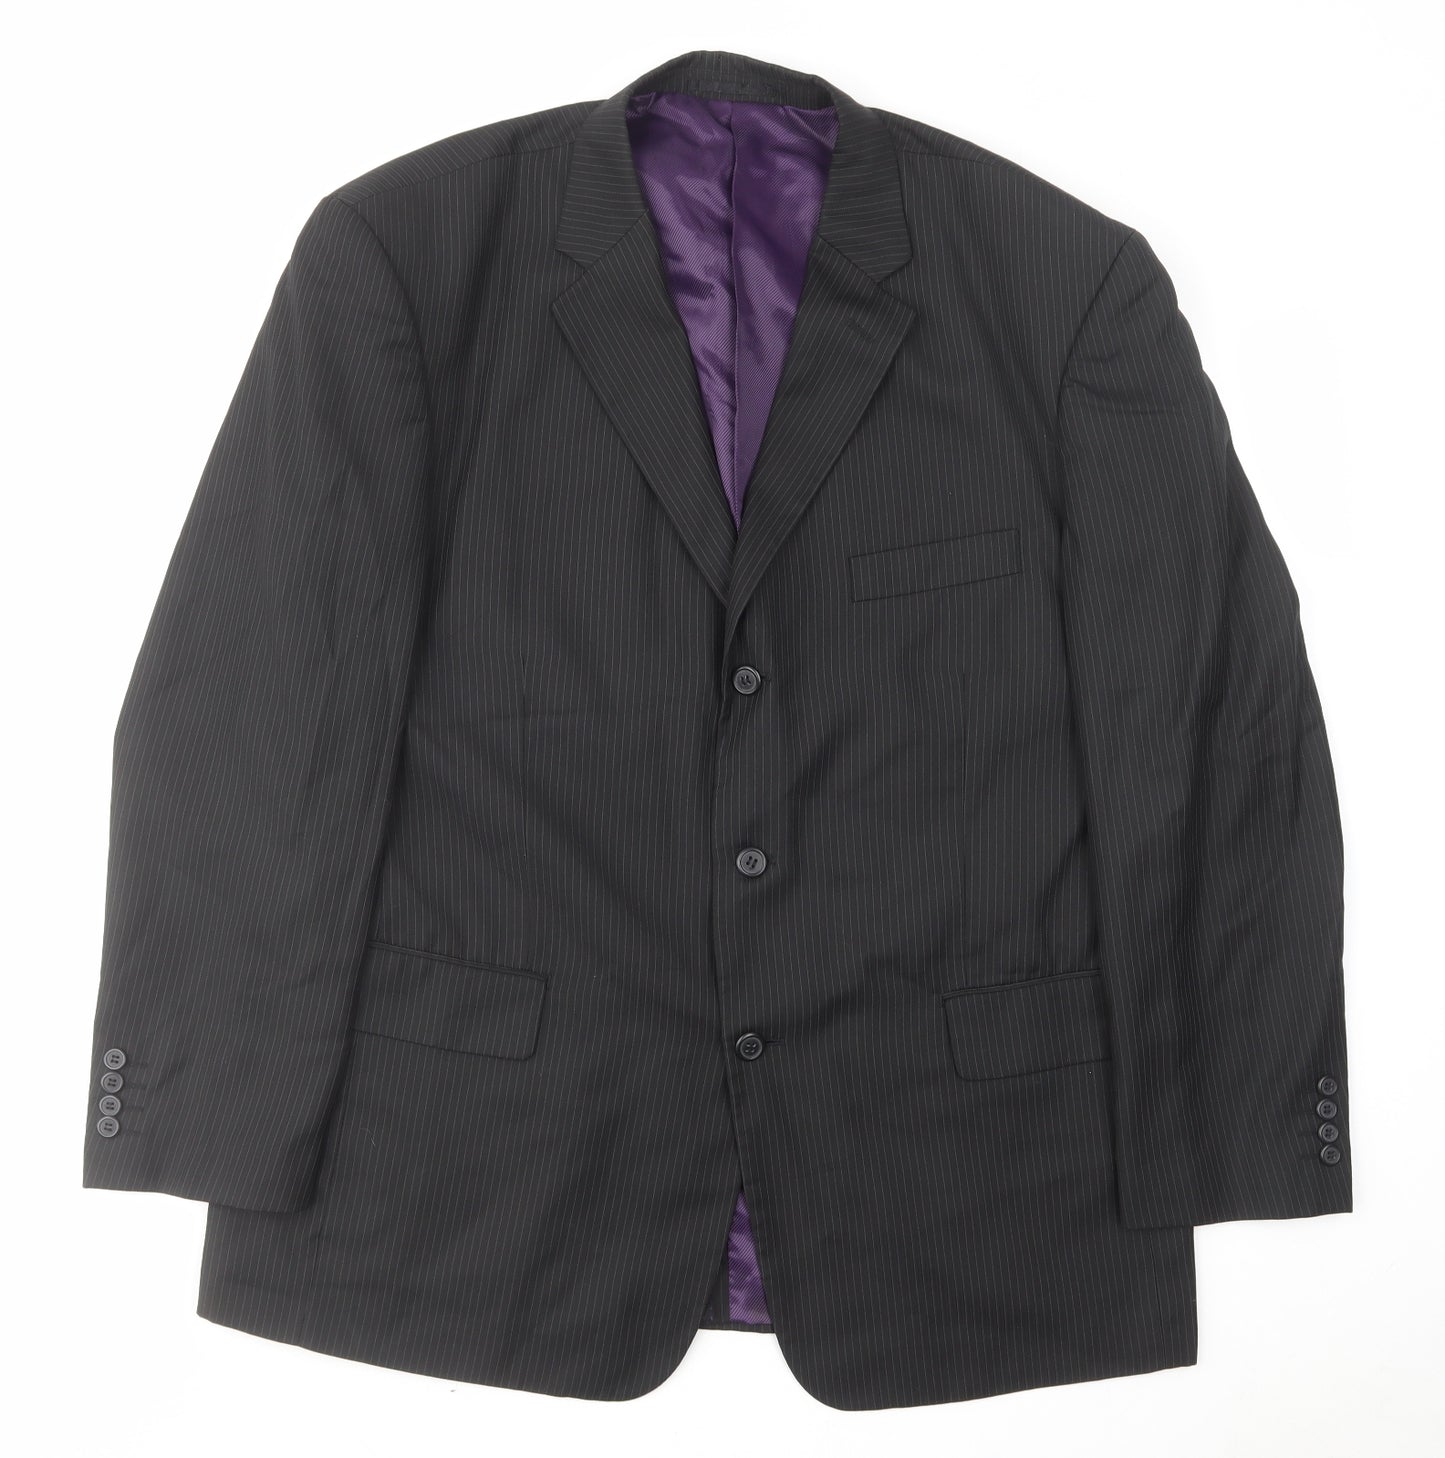 Pierre Remon Mens Black Striped Polyester Jacket Suit Jacket Size 46 Regular